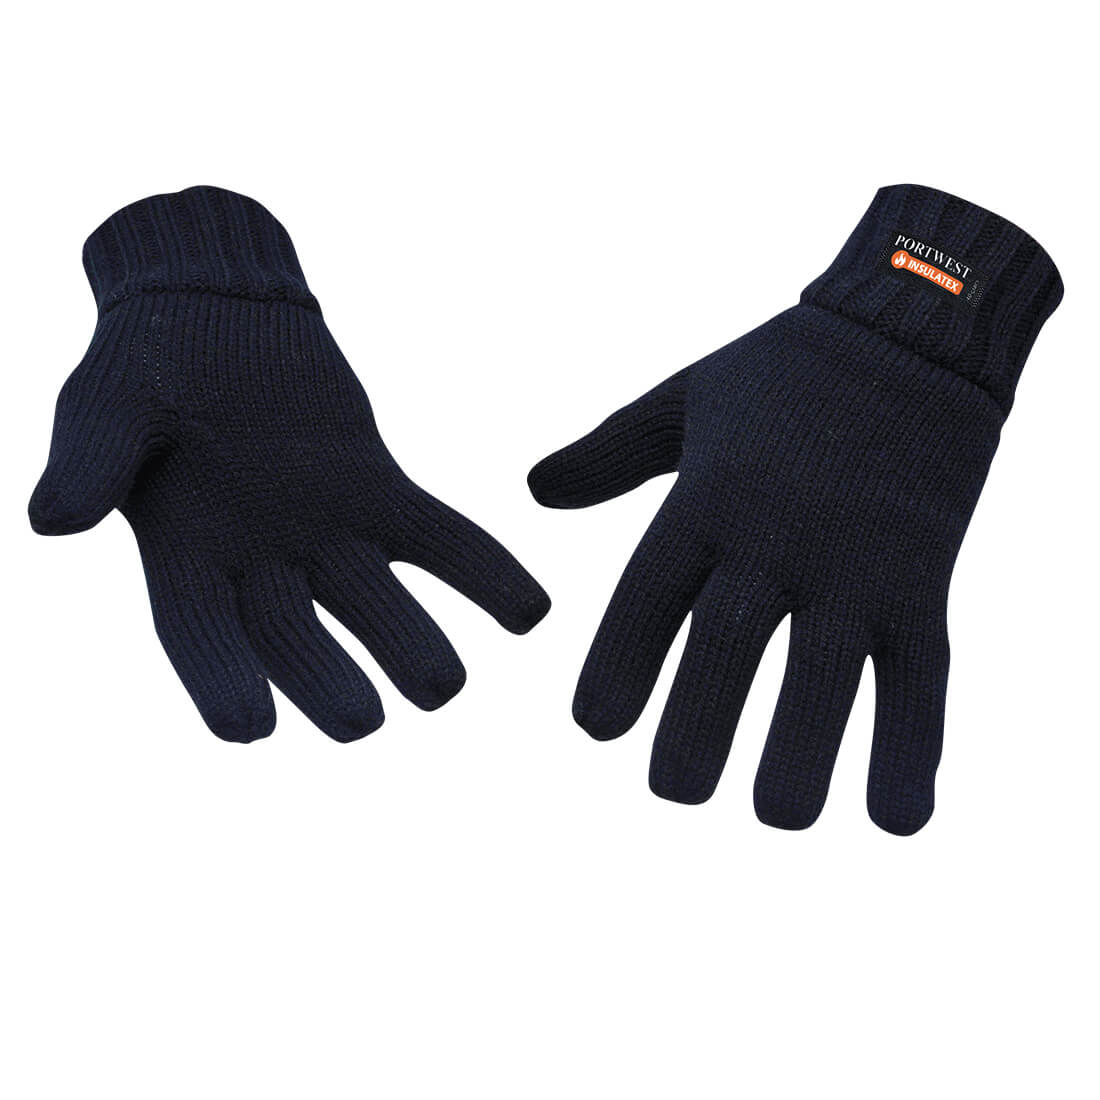 Insulatex Knit Glove, Navy  R/Fit